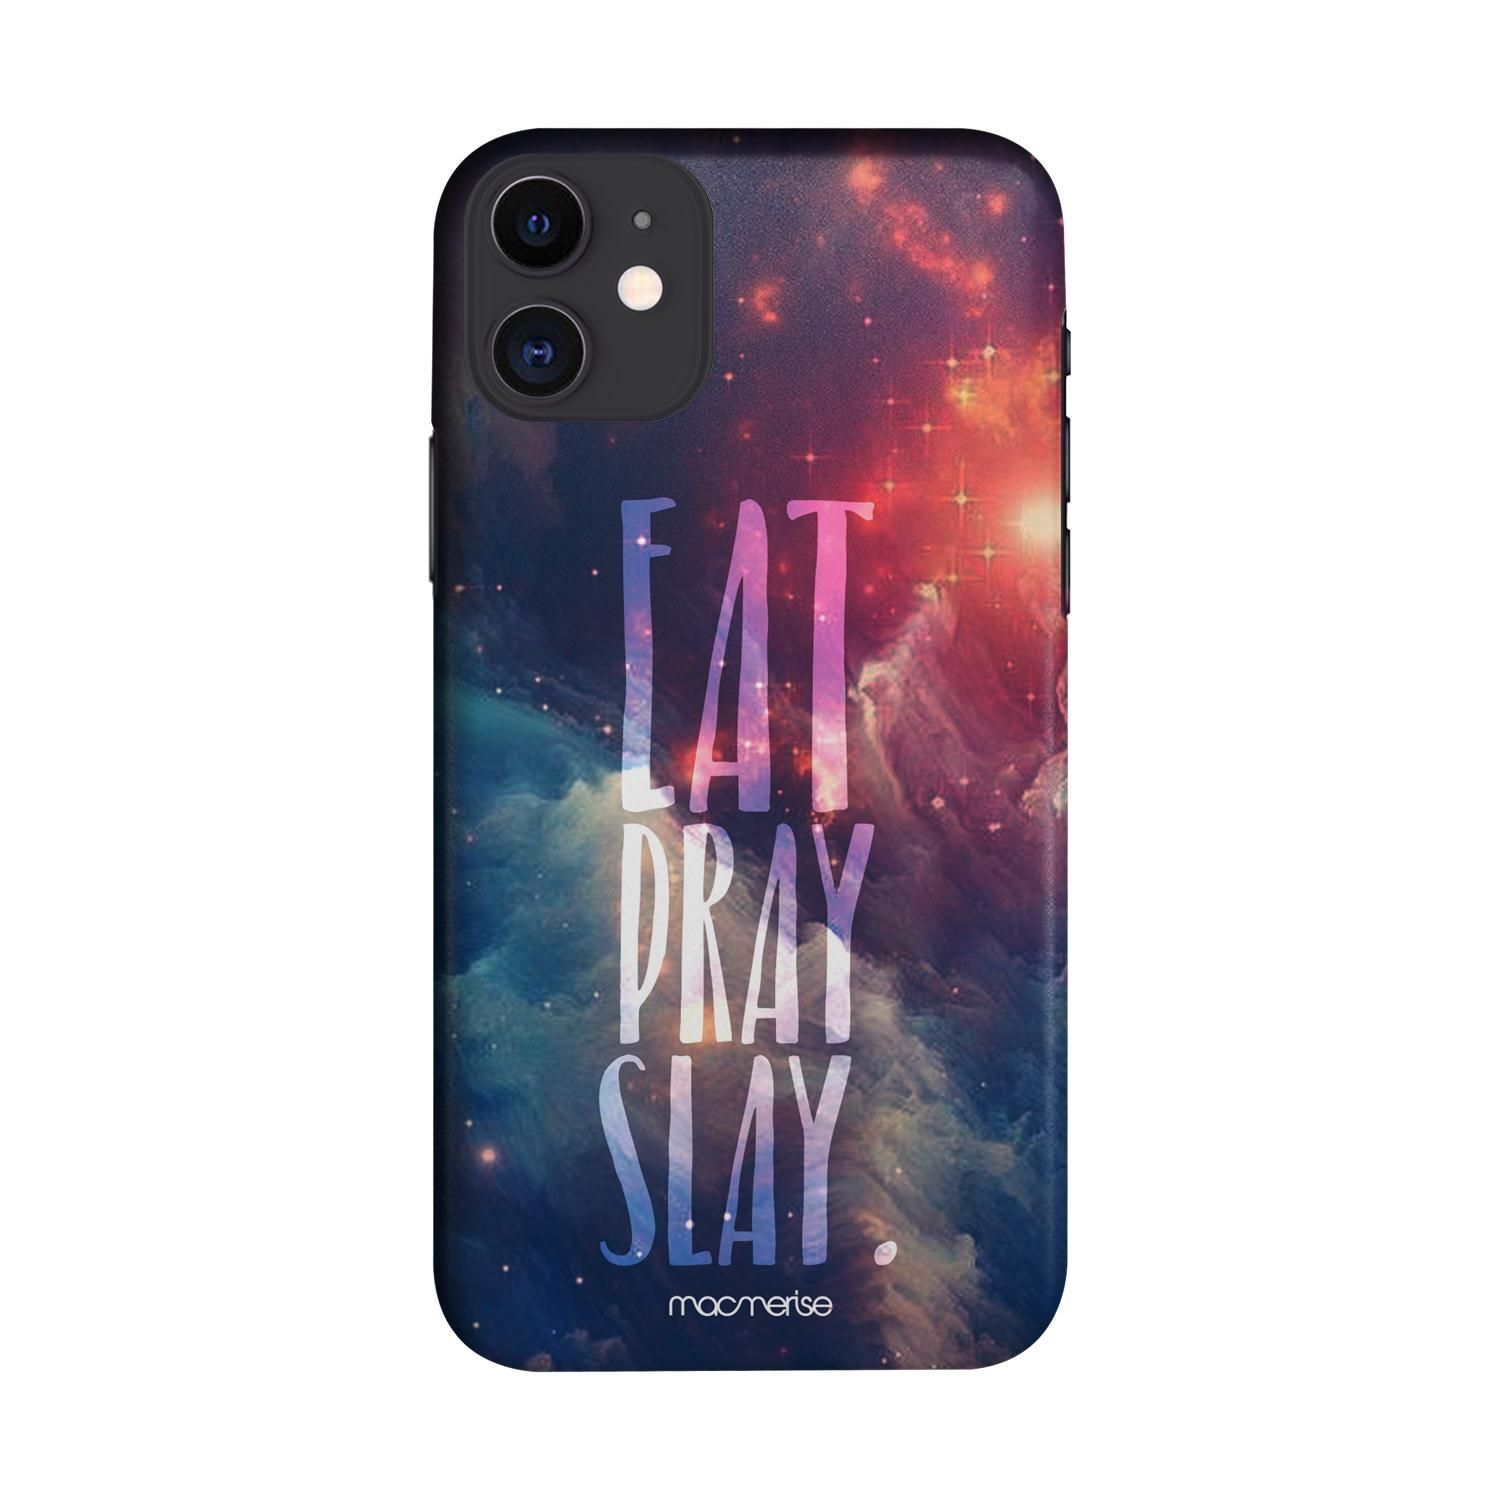 Buy Eat Pray Slay - Sleek Phone Case for iPhone 11 Online